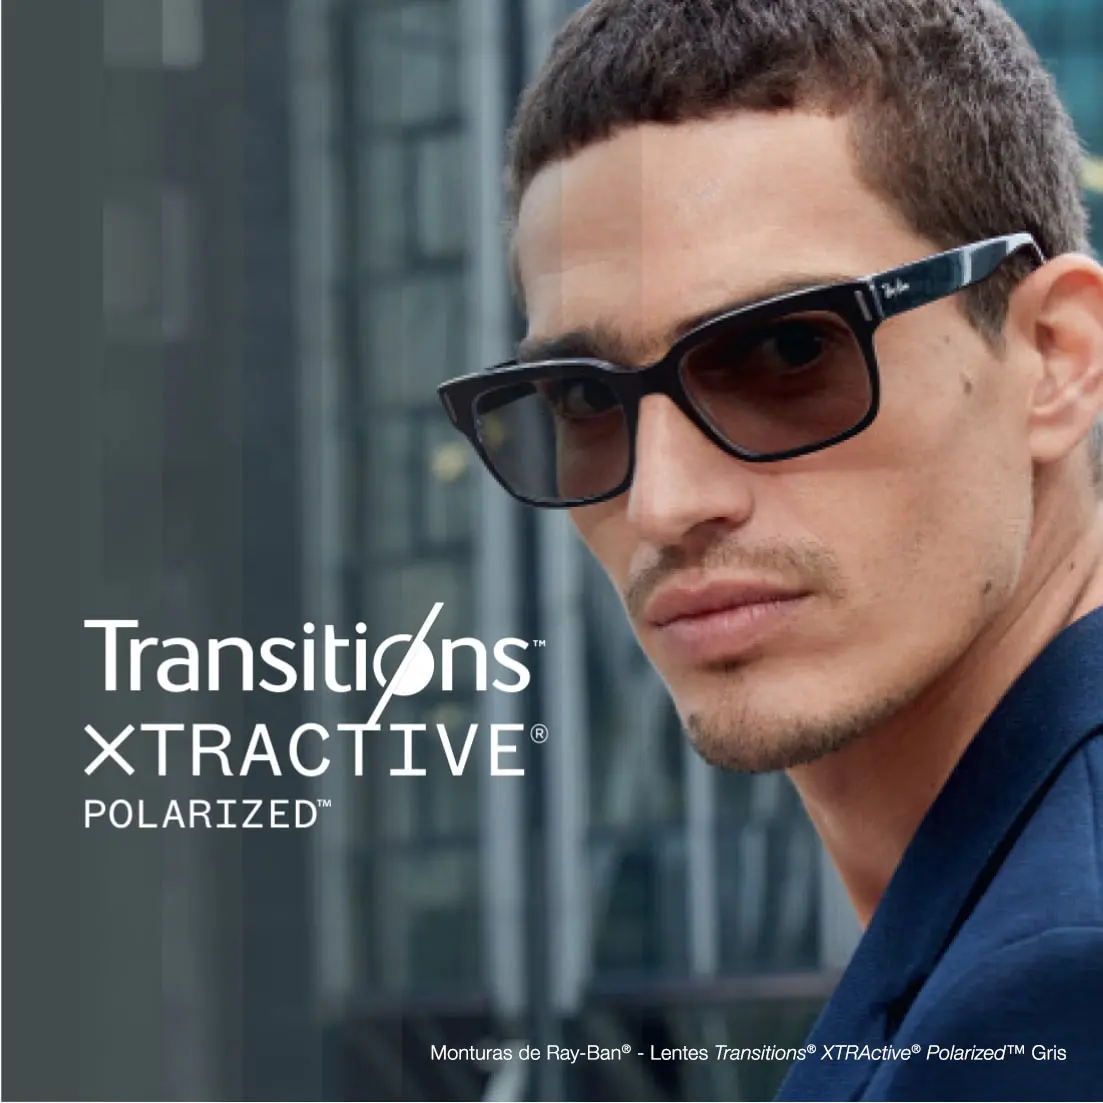 lentes cristales transitions - Qué son los cristales Transitions